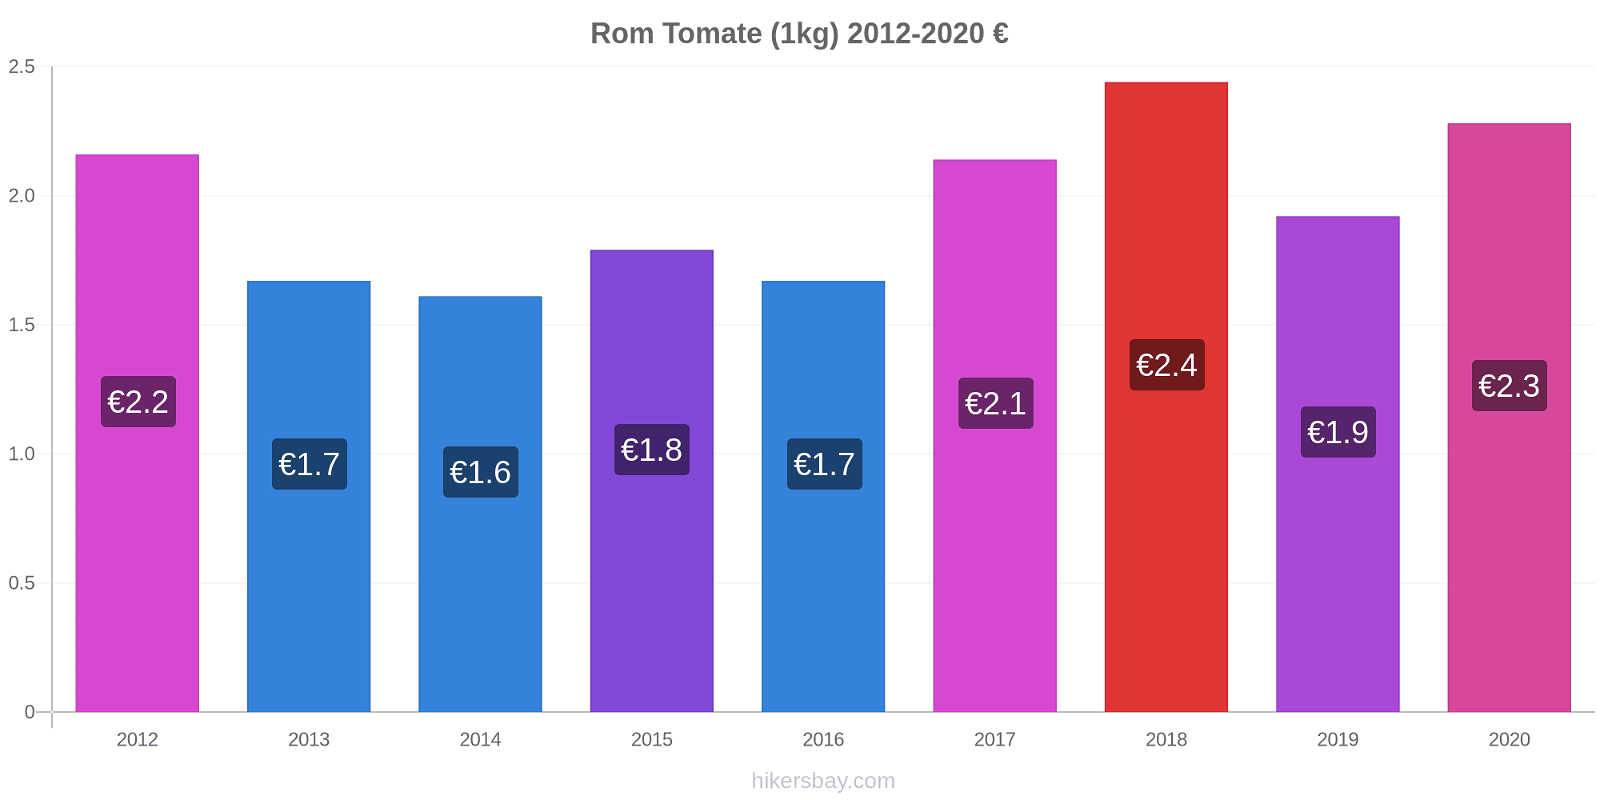 Rom Preisänderungen Tomaten (1kg) hikersbay.com